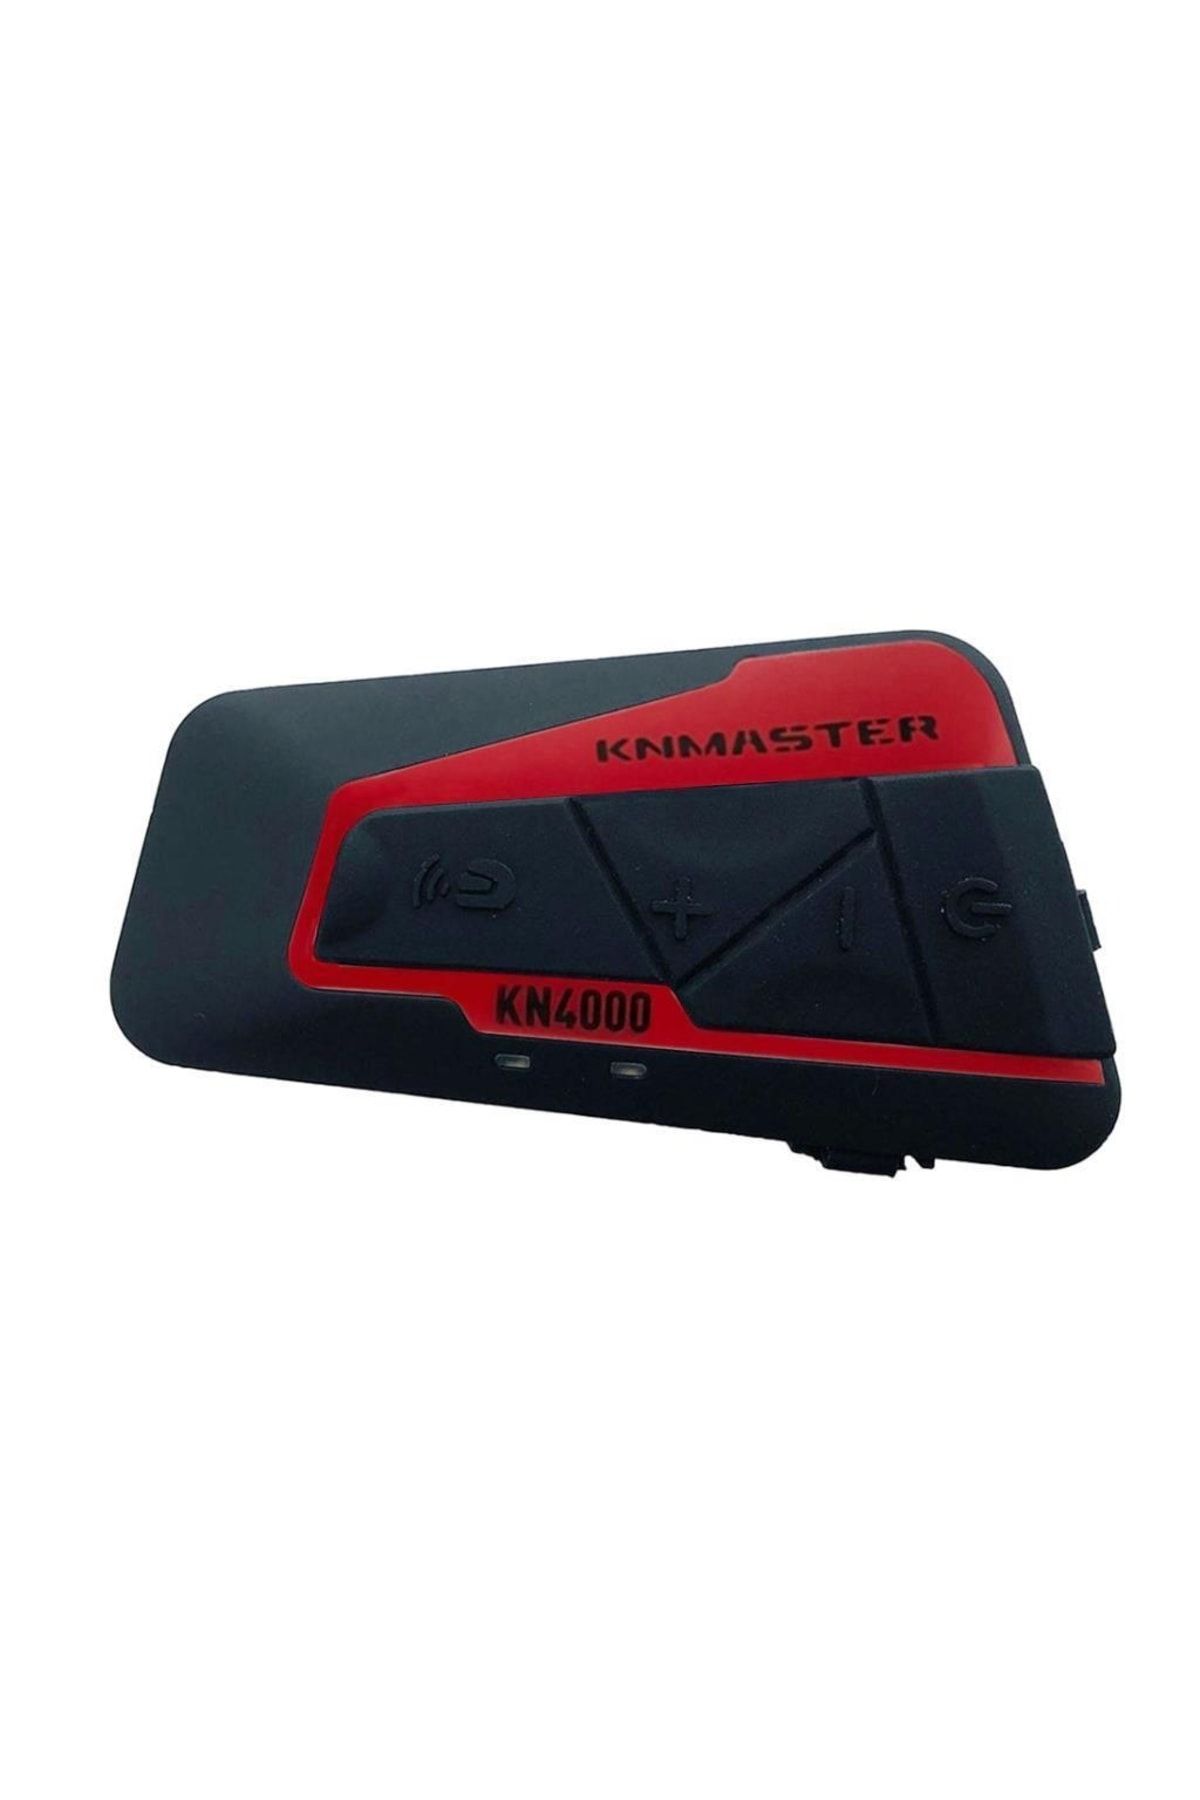 Knmaster Kn4000 Motosiklet Kask Interkom Bluetooth Intercom Kulaklık Seti Kırmızı Uyumlu